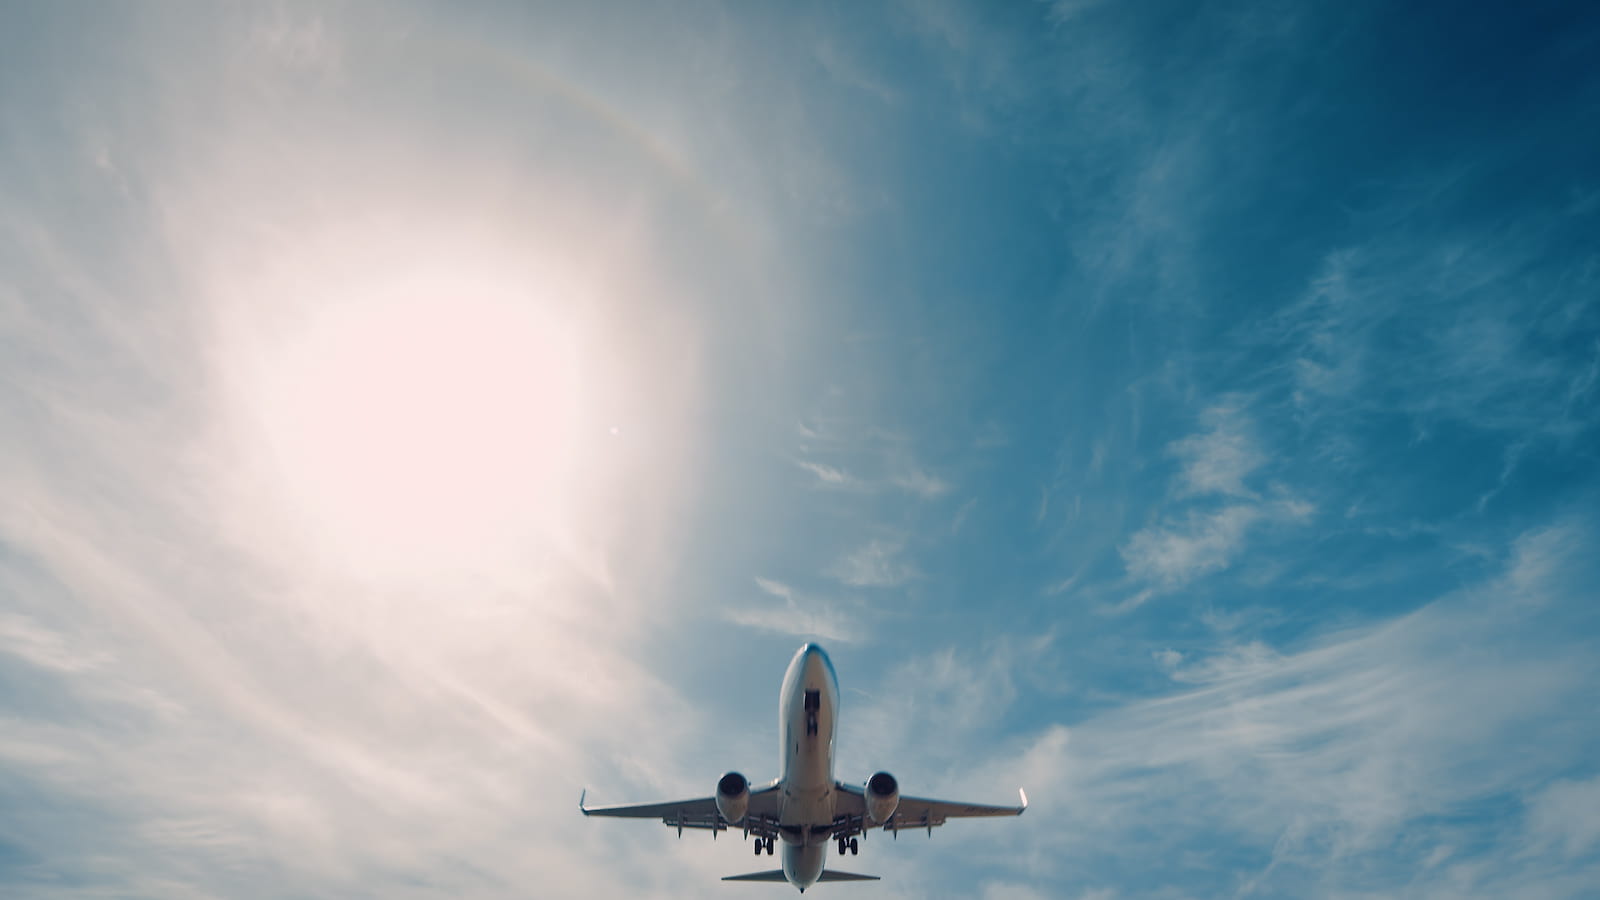 An airplane flying across cloudy blue sky